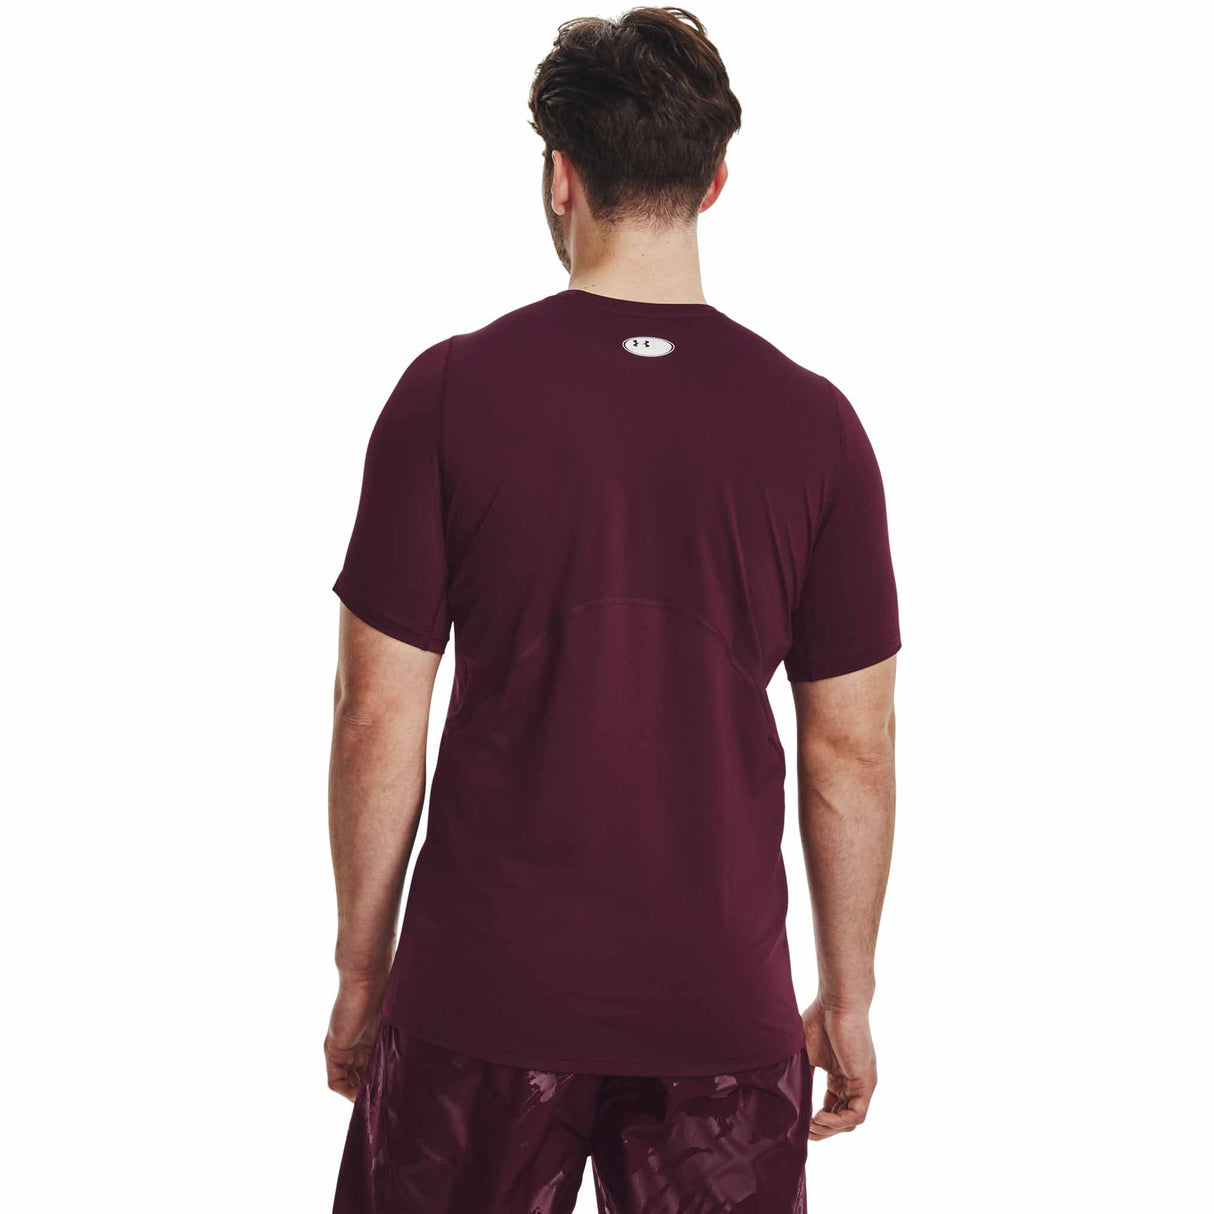 UA HeatGear Armour Fitted T-shirt à manches courtes pour hommes - Dark Maroon